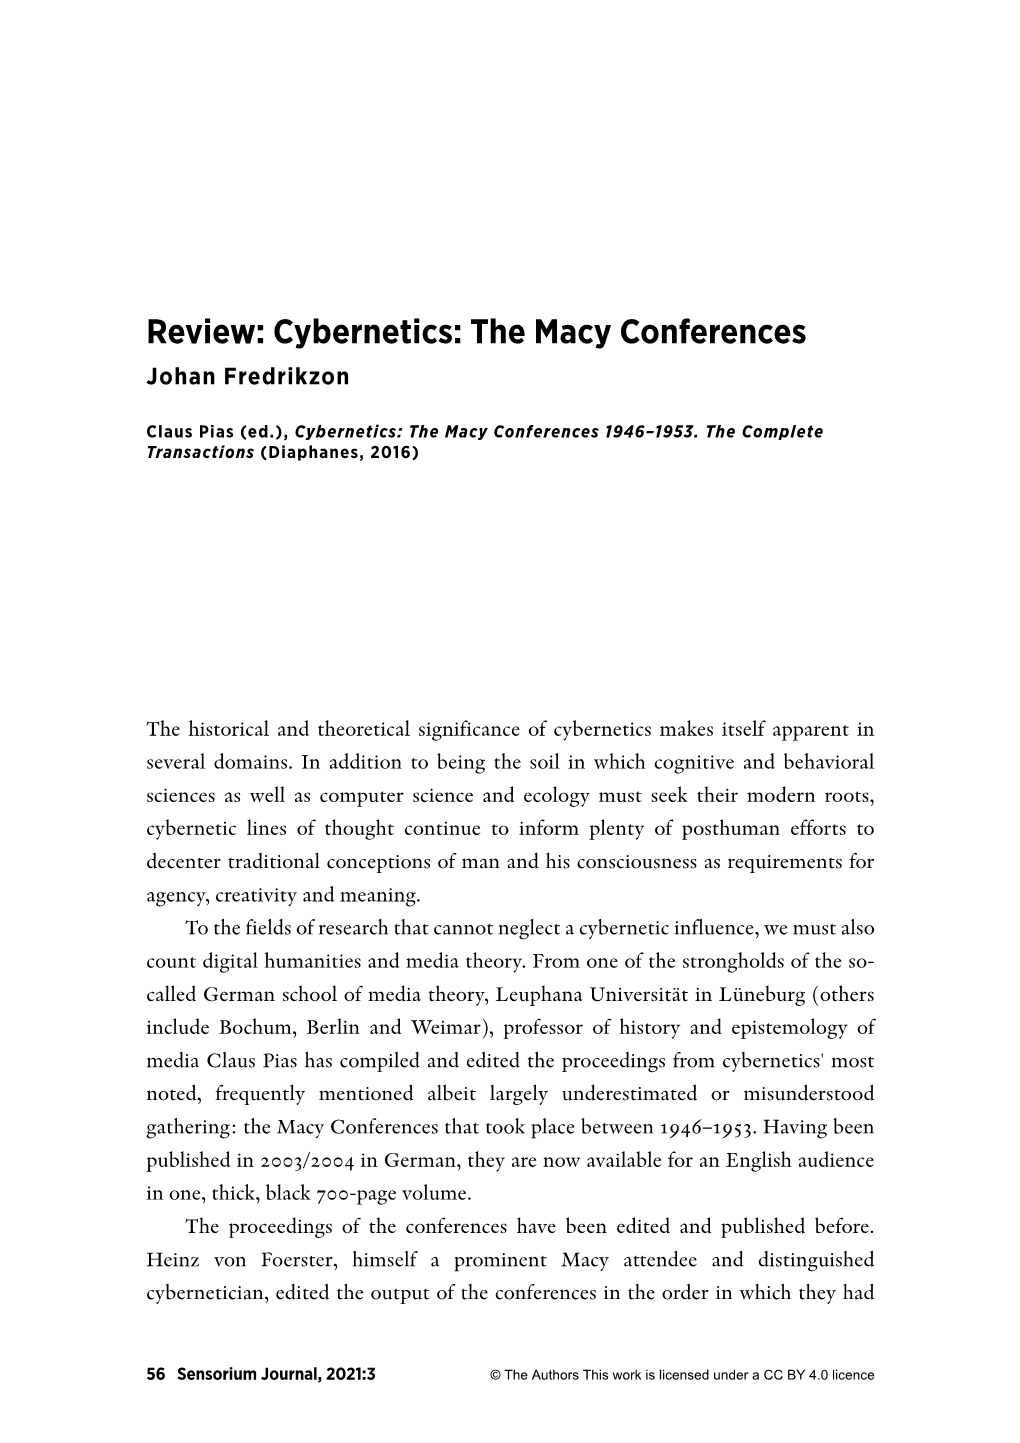 Review: Cybernetics: the Macy Conferences Johan Fredrikzon